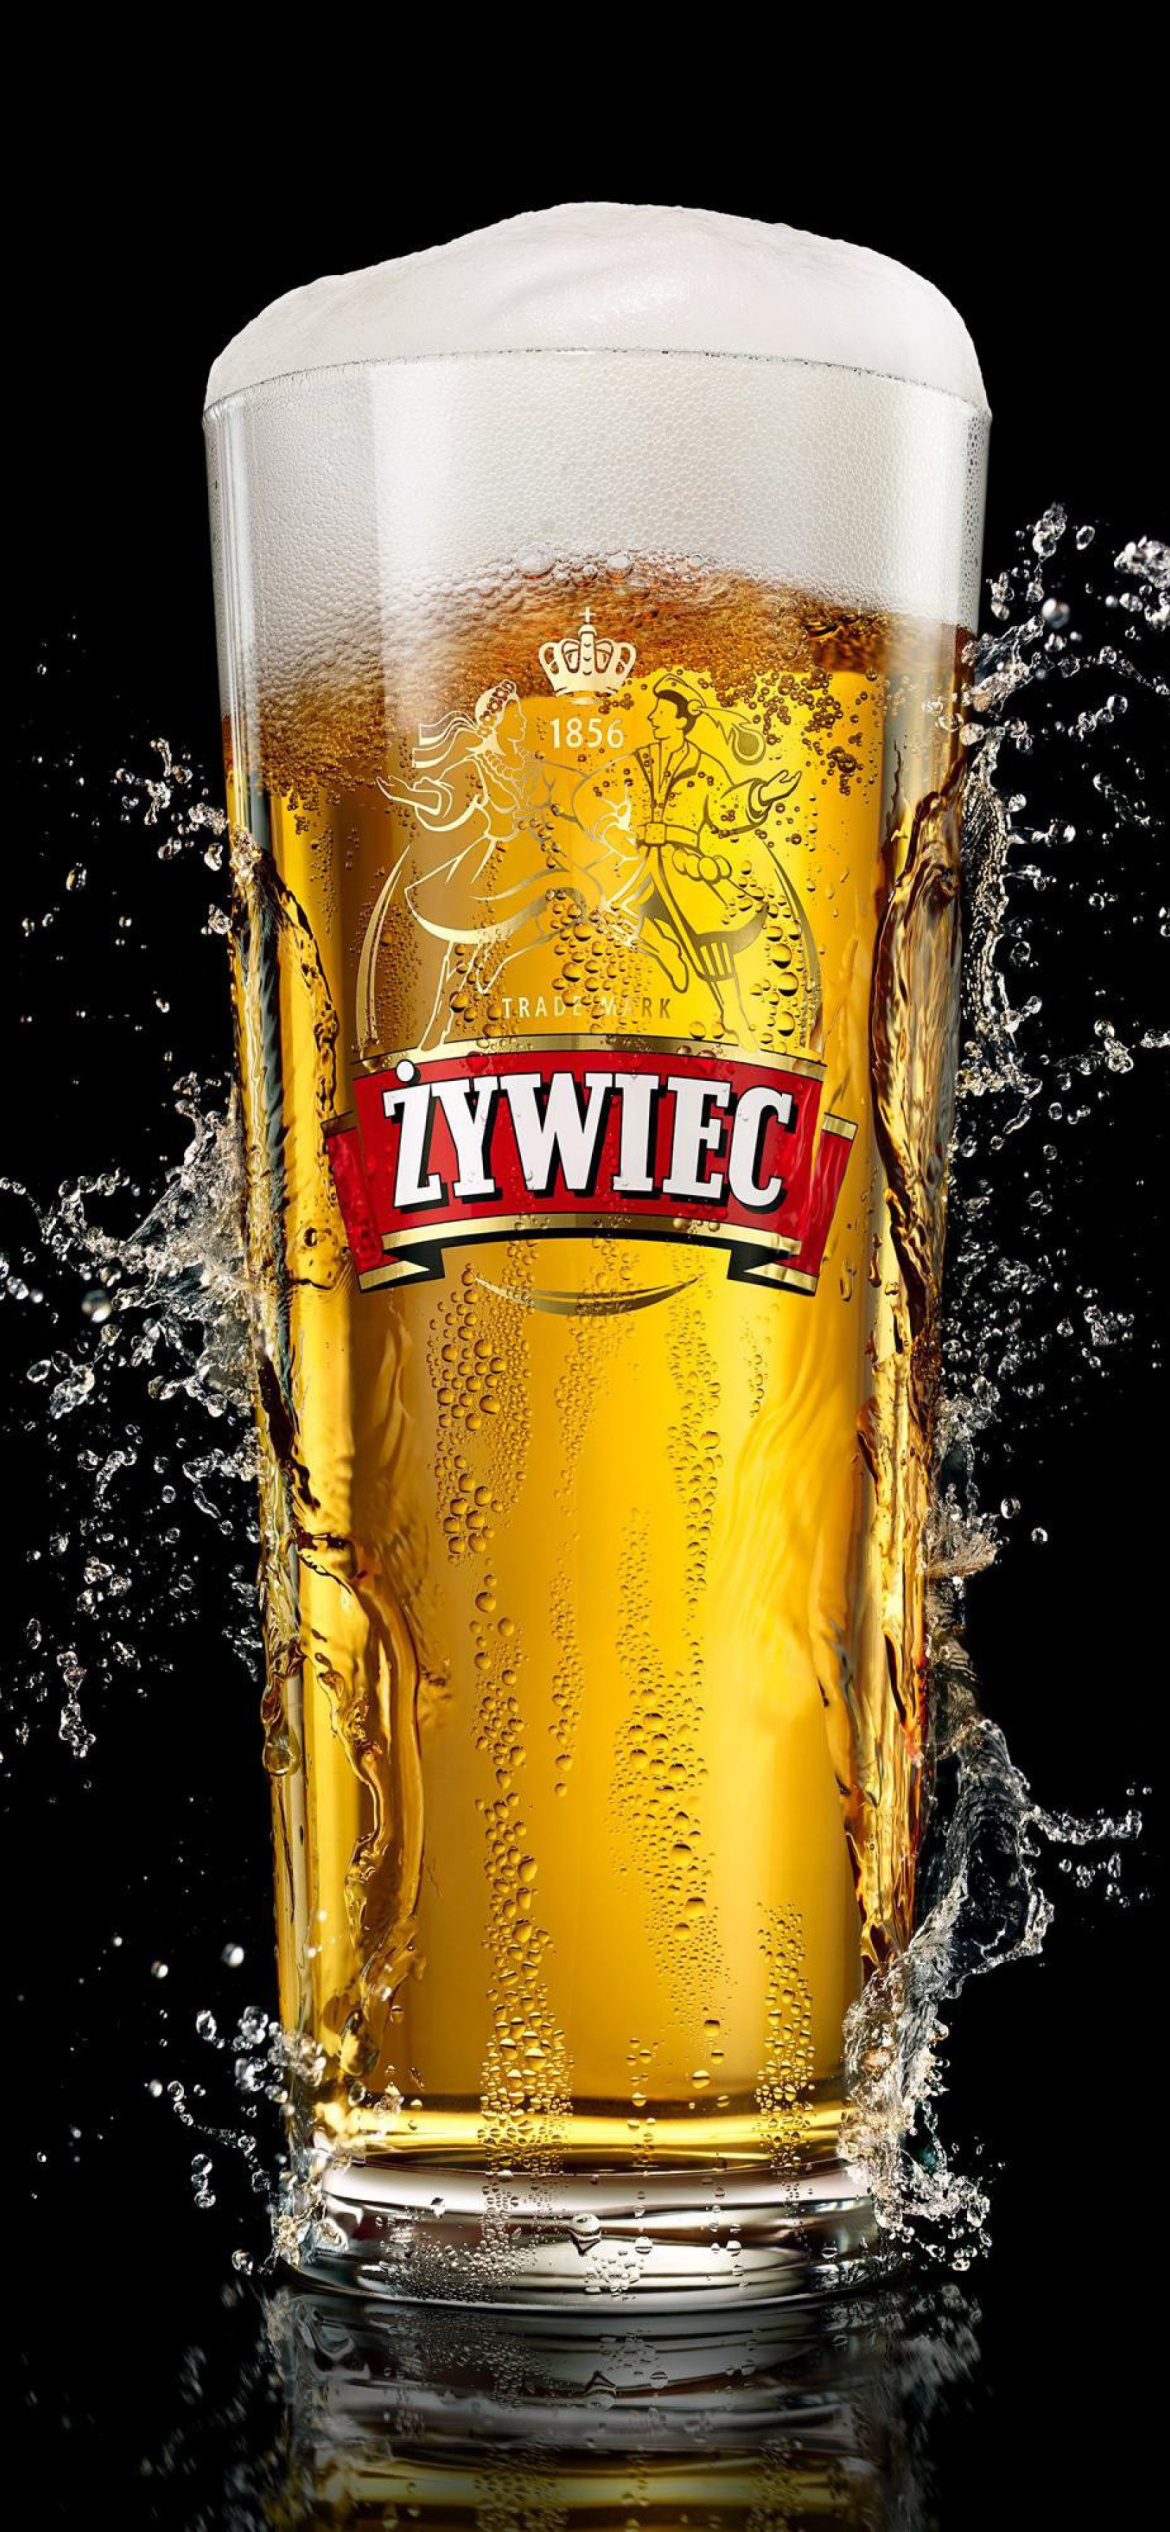 Zywiec Beer wallpaper 1170x2532